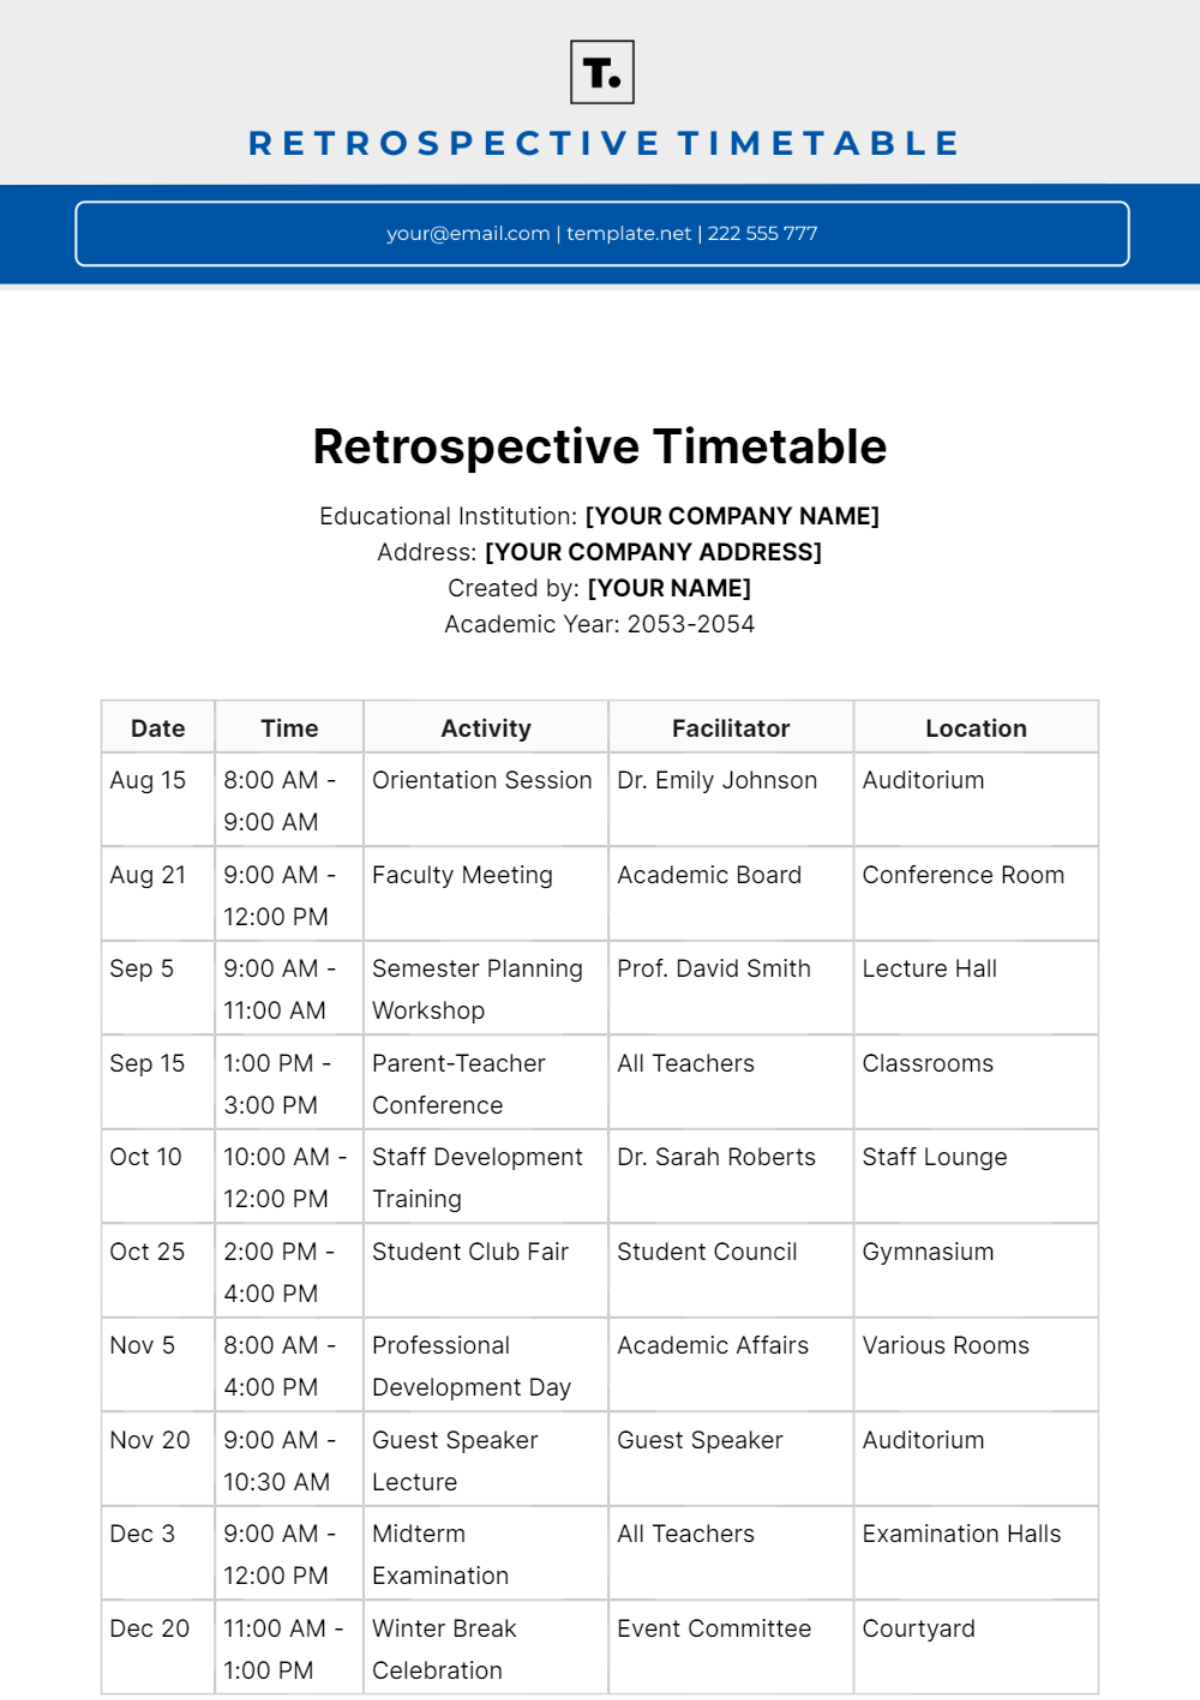 Retrospective Timetable Template